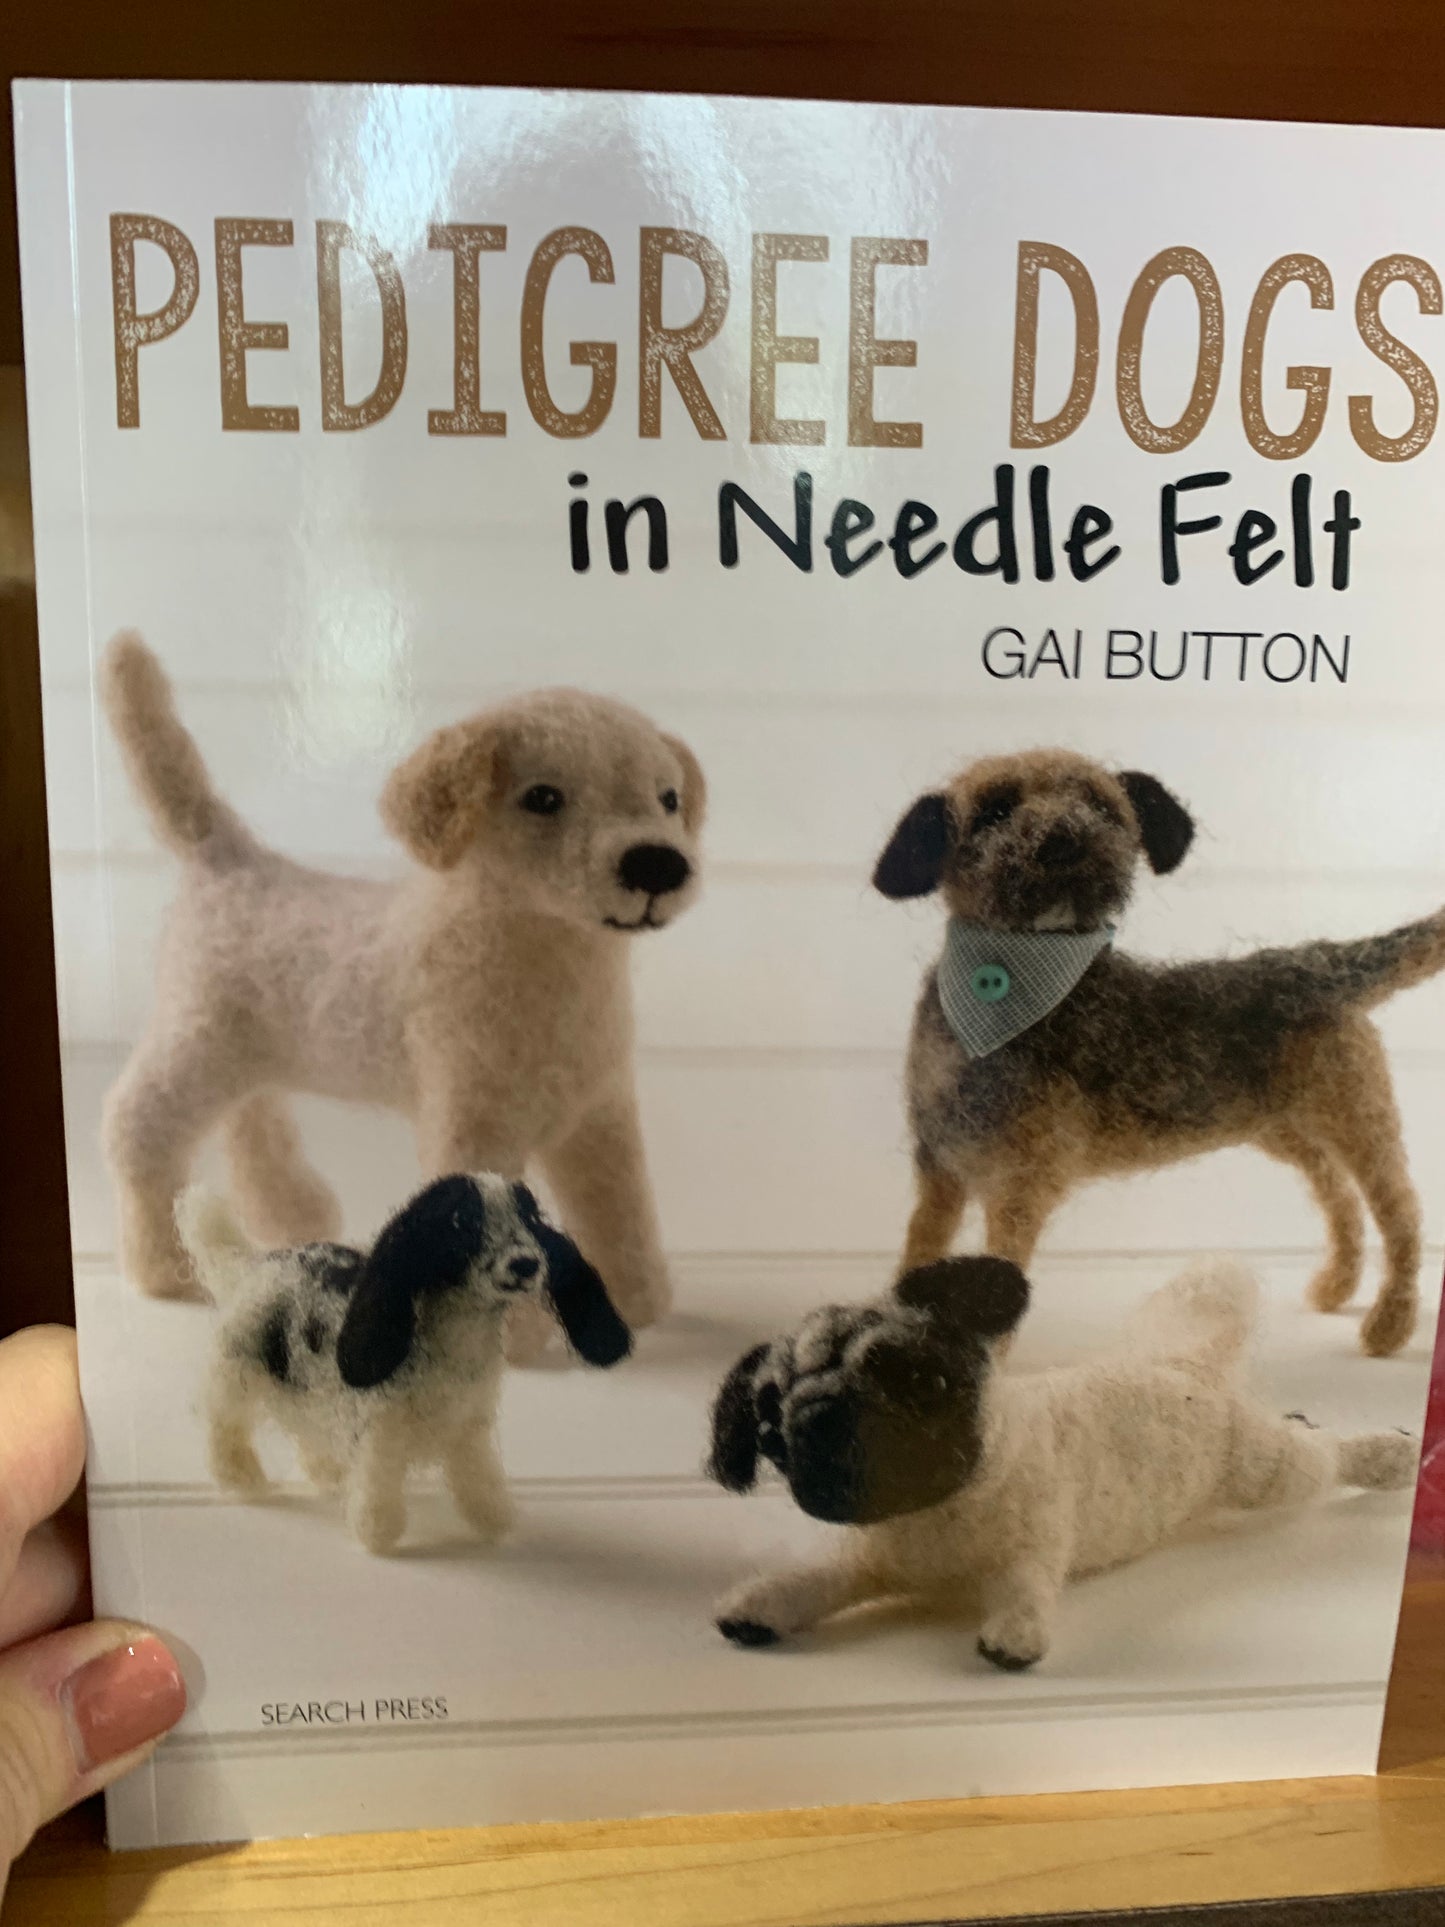 Pedigree Dogs in Needle Felt - Gai Button